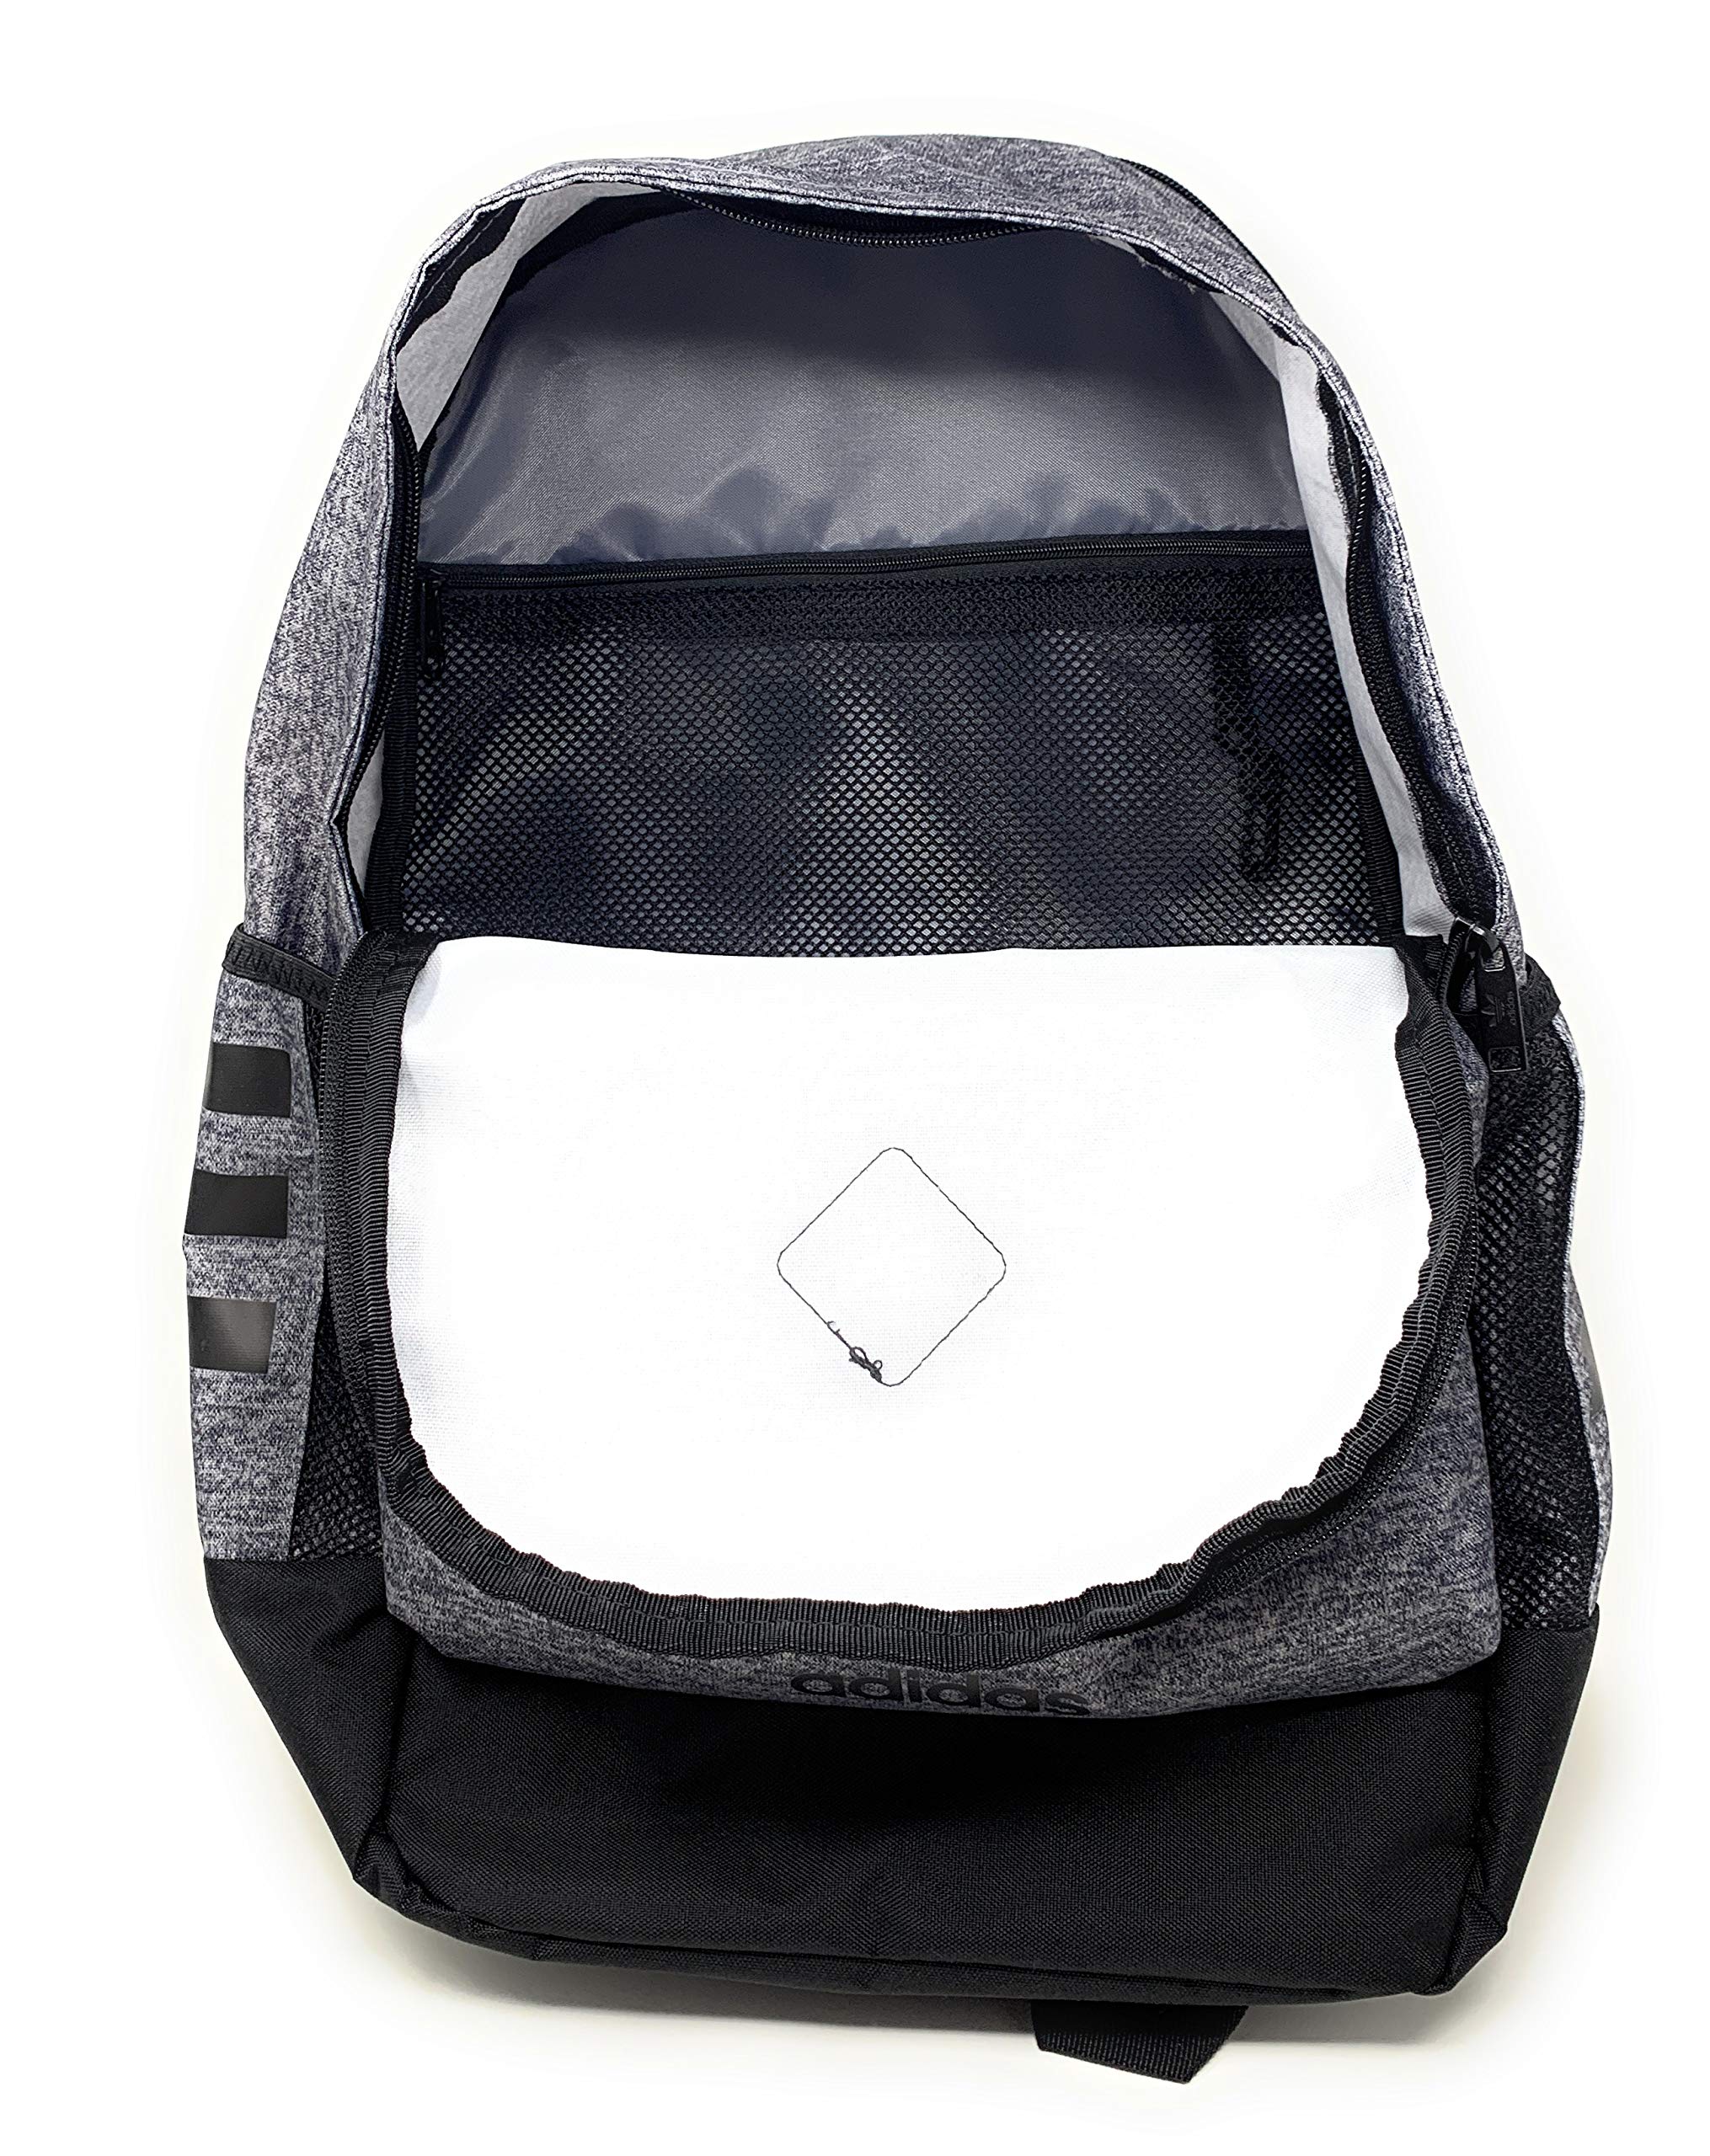 adidas Original Base Backpack, Onix Jersey, One Size